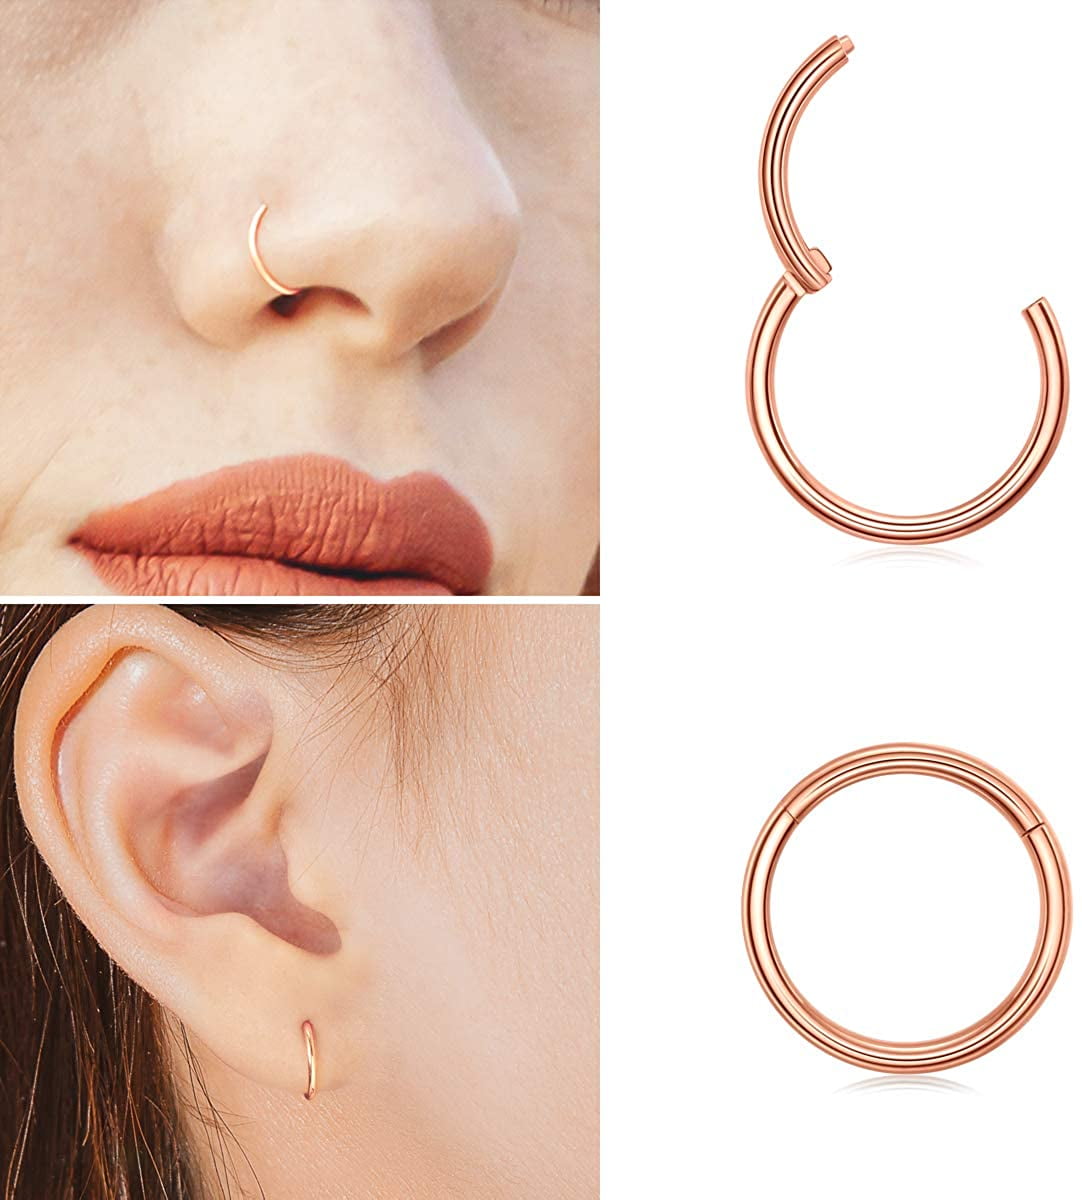 Women Hoop Nose Ring Earring Stainless Steel Body Cartilage Piercing Jewelry HOT 